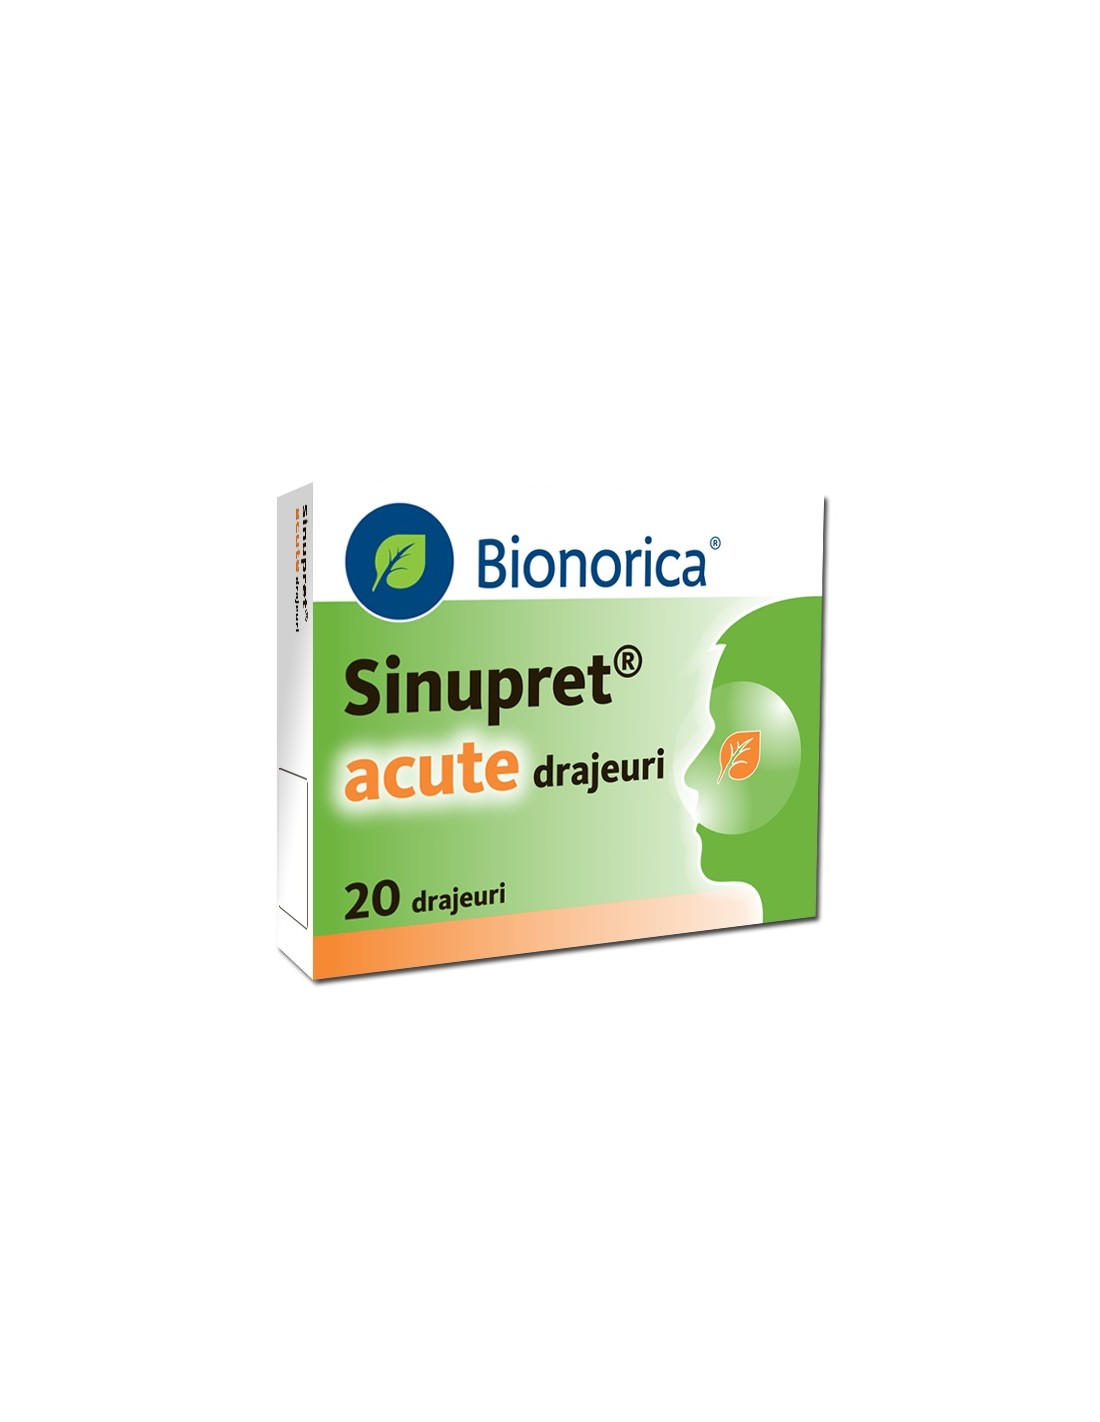 Sinupret Acute, 20 drajeuri, Bionorica - NAS-INFUNDAT - BIONORICA SE